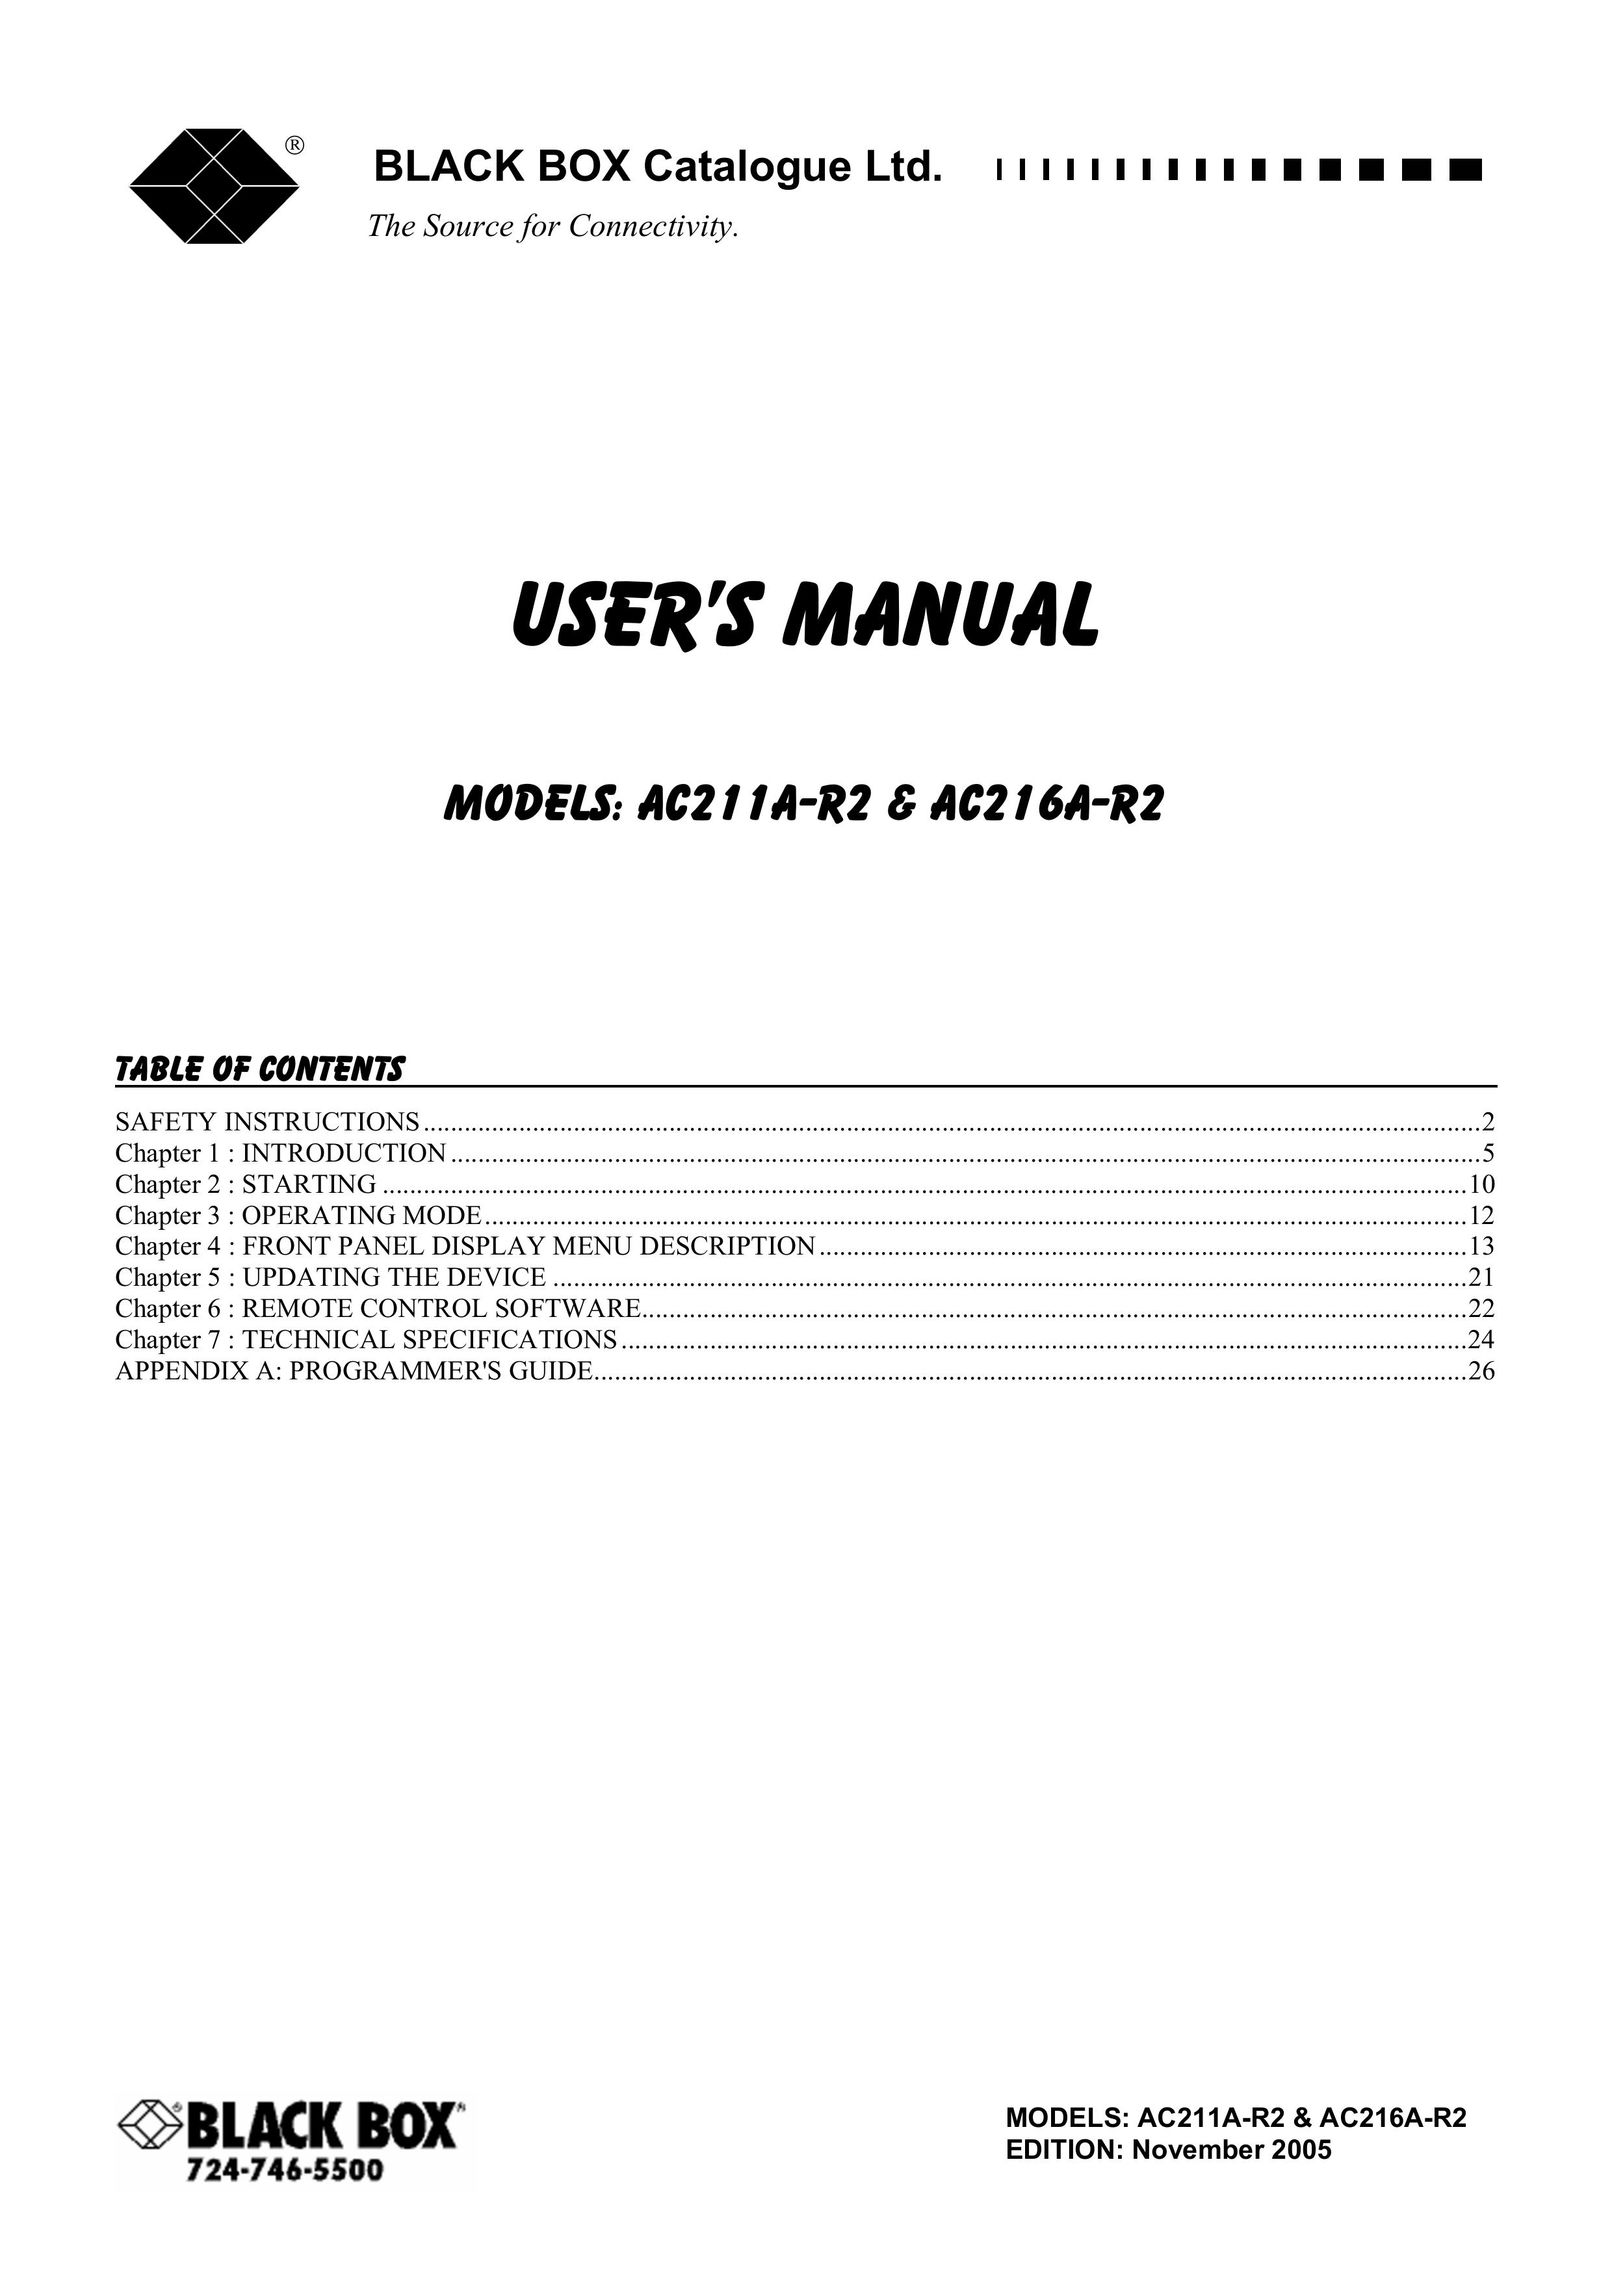 Black Box AC211A-R2 Cable Box User Manual (Page 1)